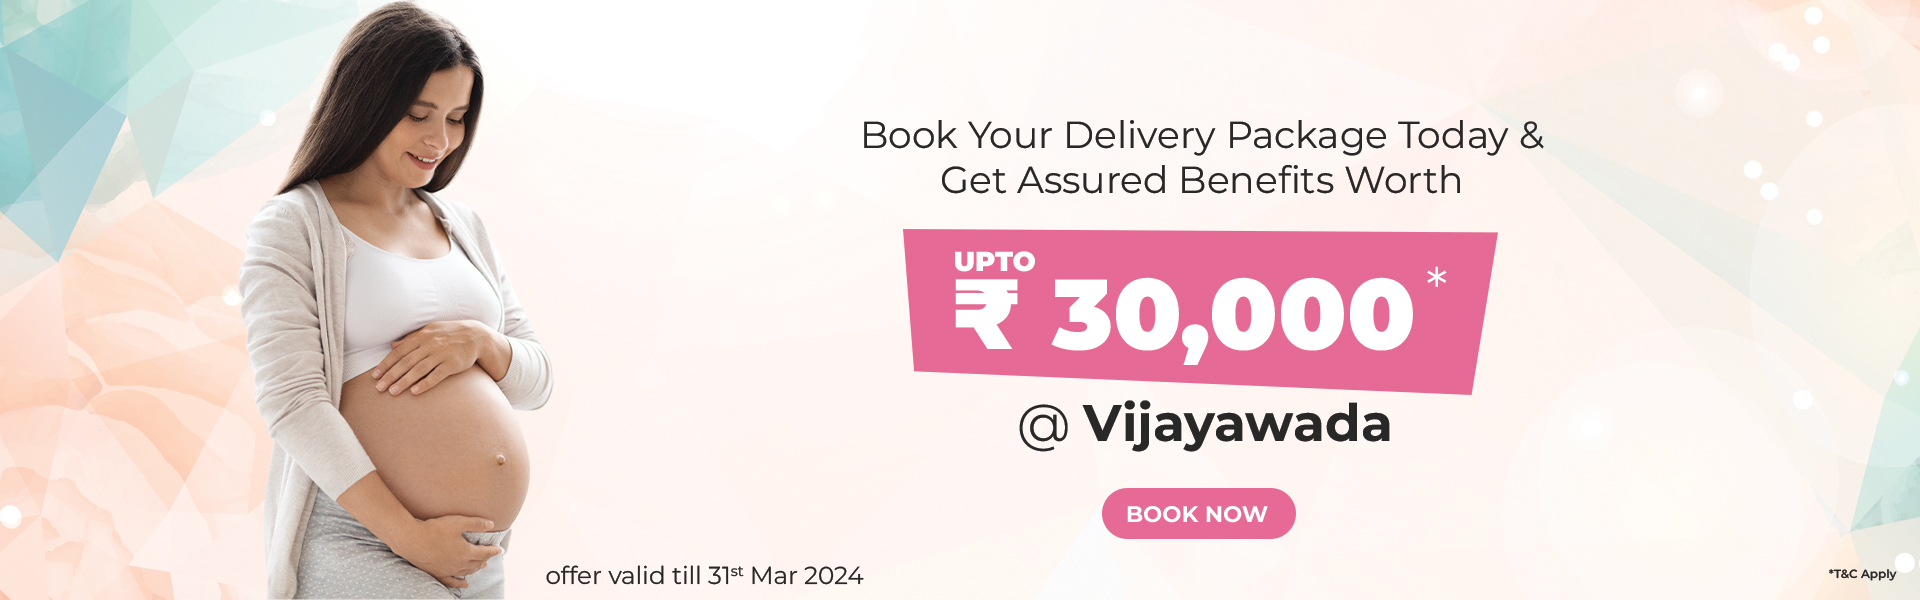 Delivery Package vijayawda 30,000 web banner